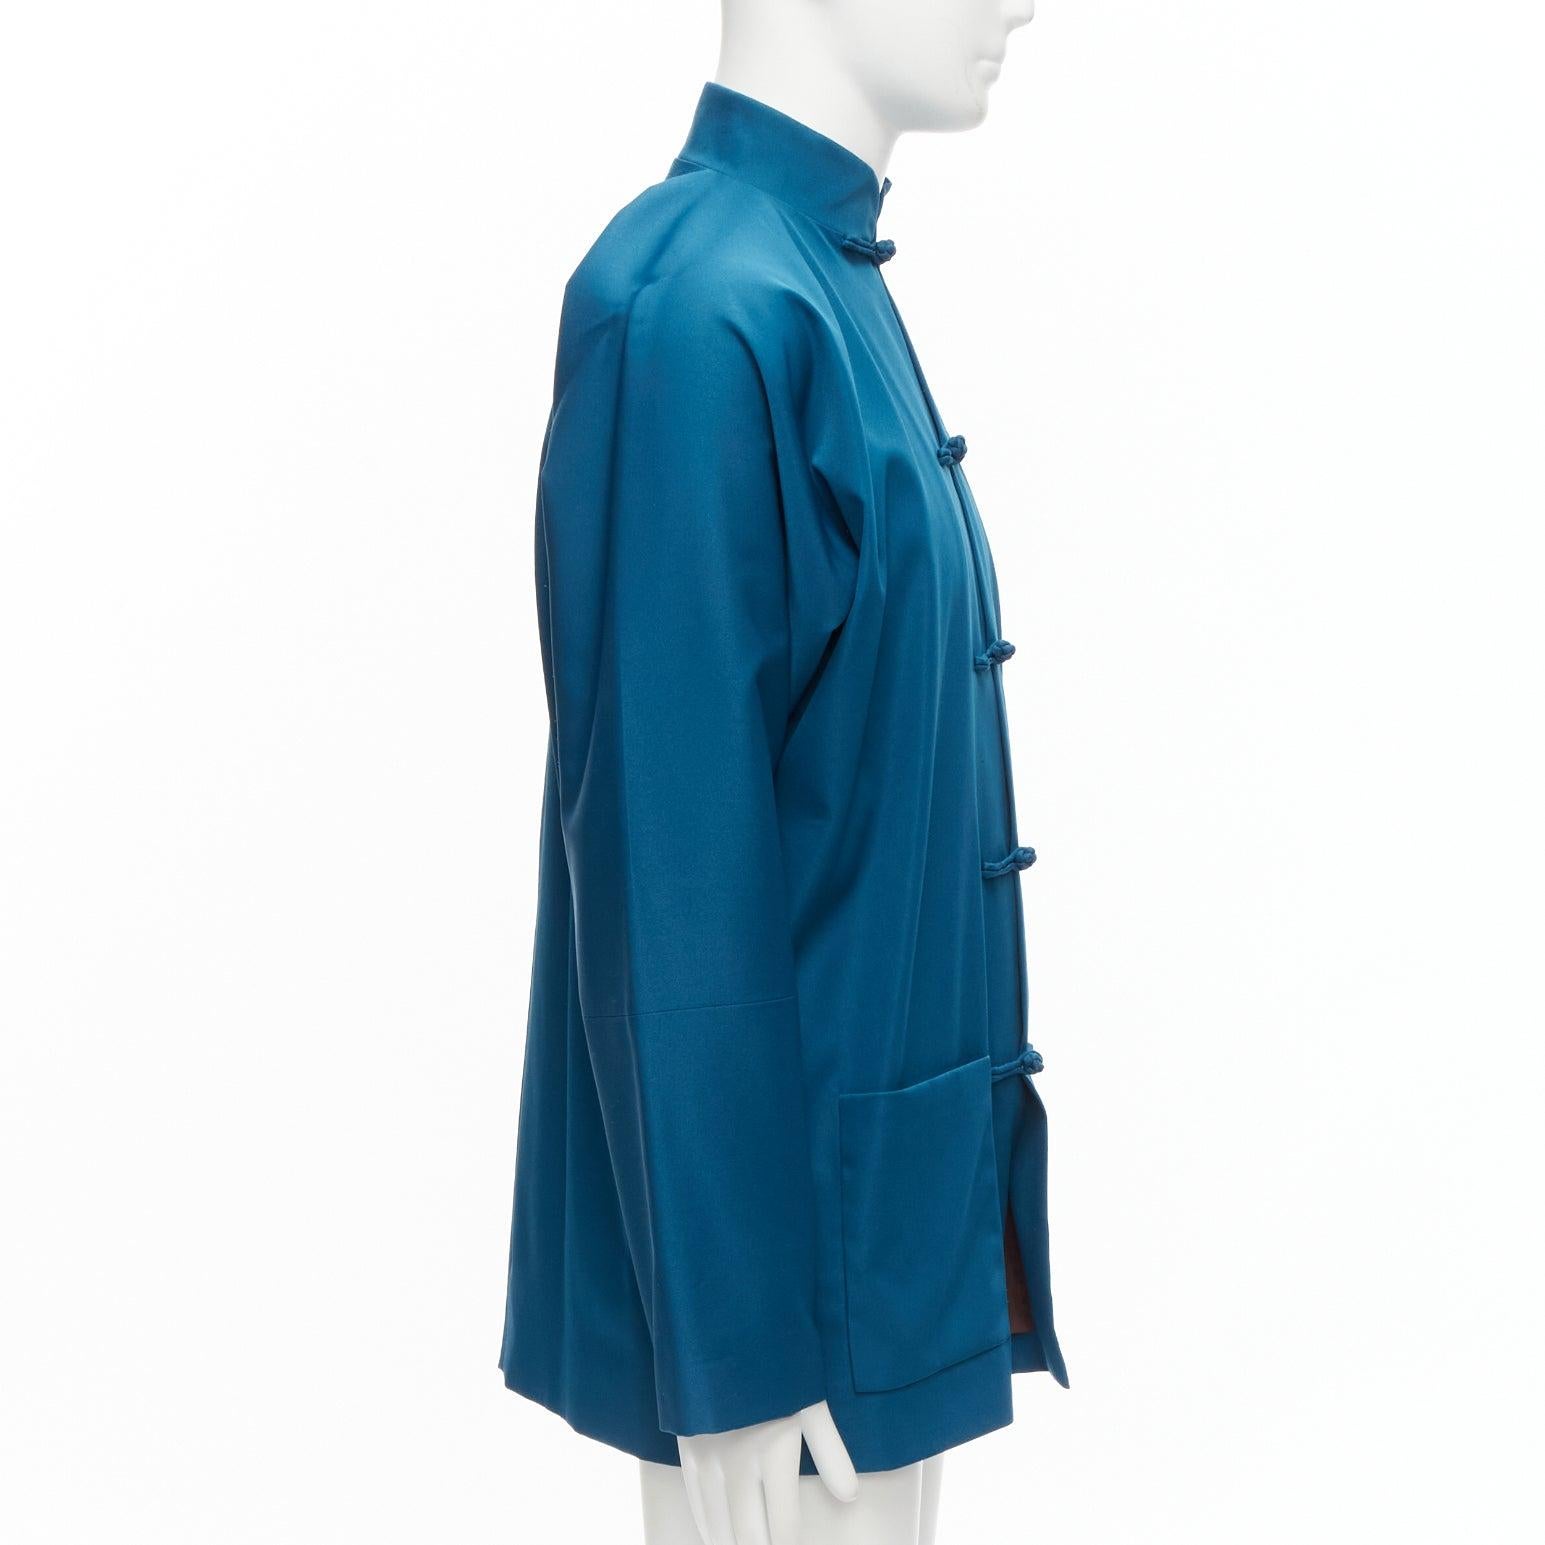 SHANGHAI TANG silky Chinese qipao button mandarin collar dolman jacket IT46 S 1